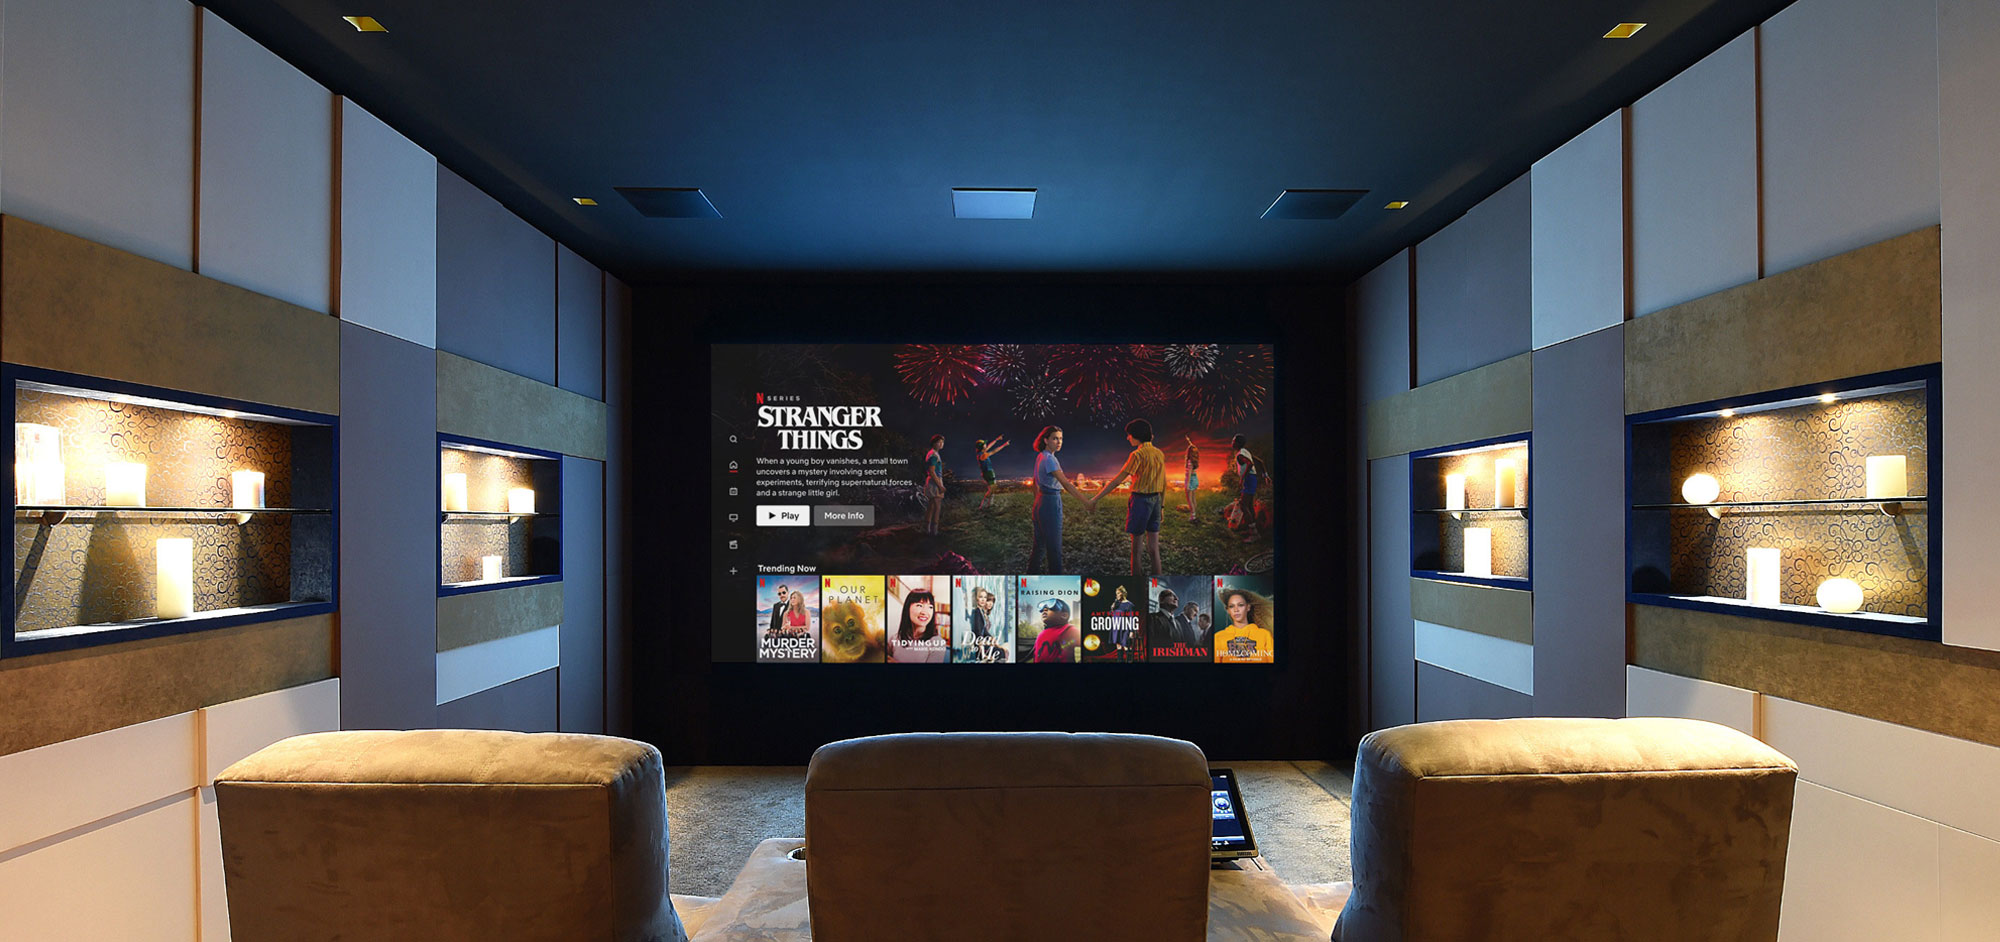 Home Cinema System